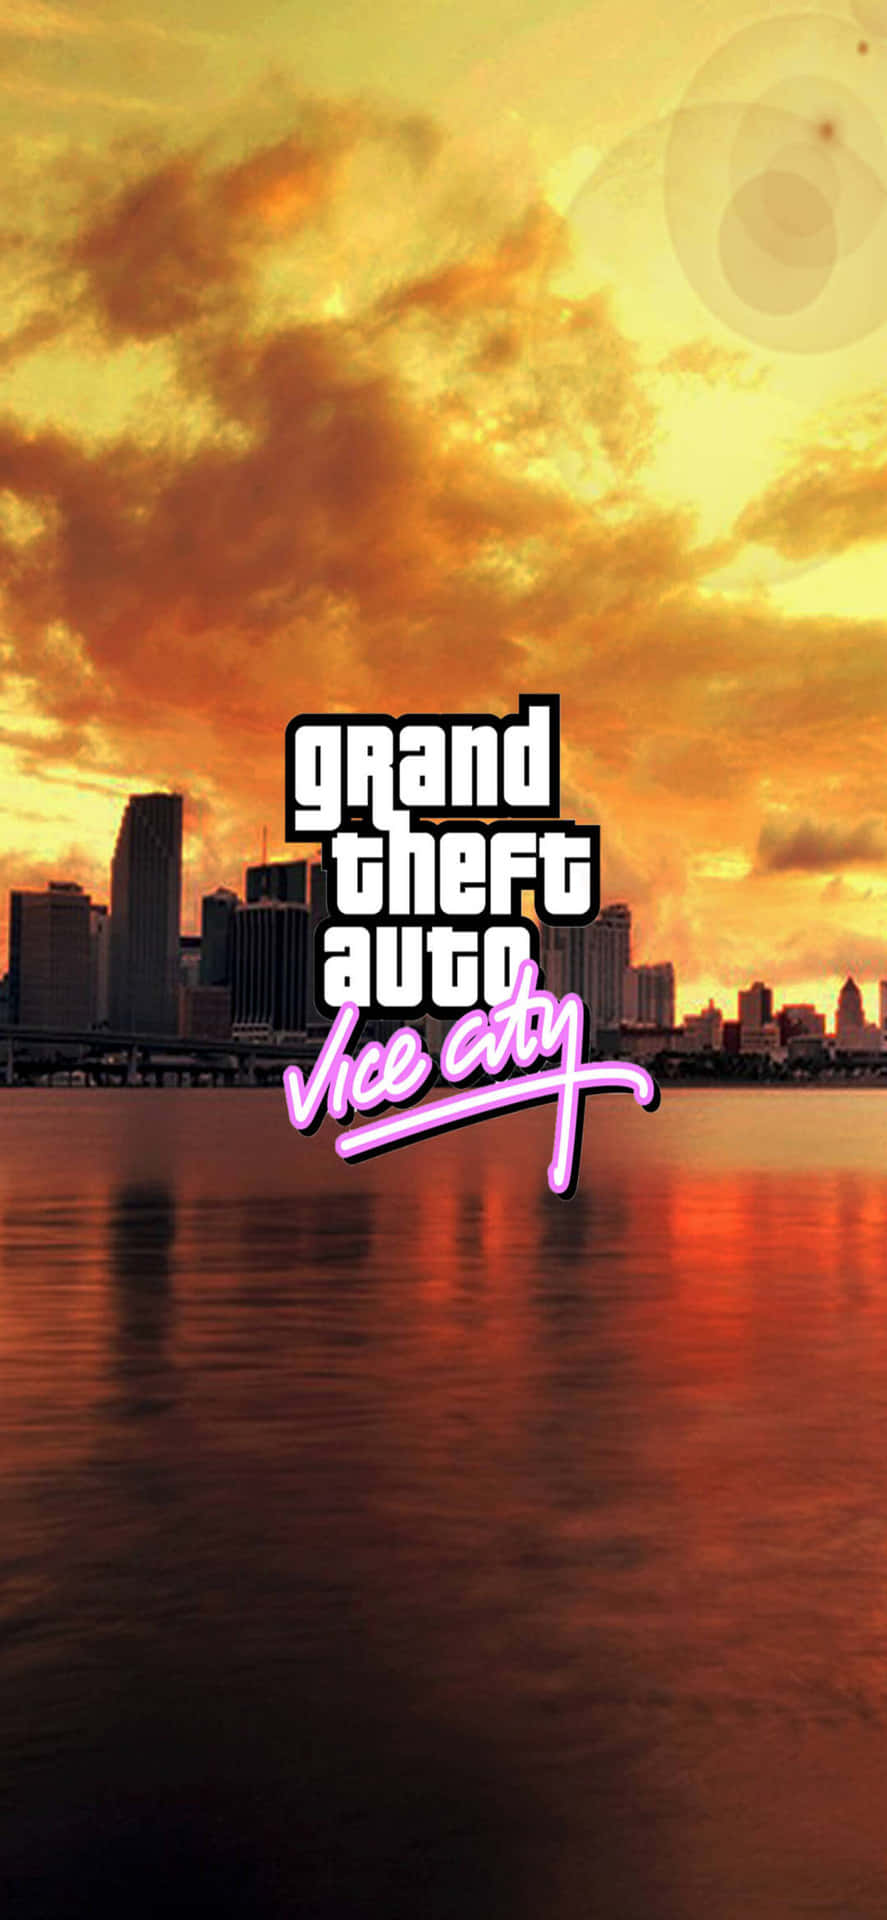 Iphonexs Max Bakgrundsbild Av Grand Theft Auto V Vice City Affisch Strandaffisch.